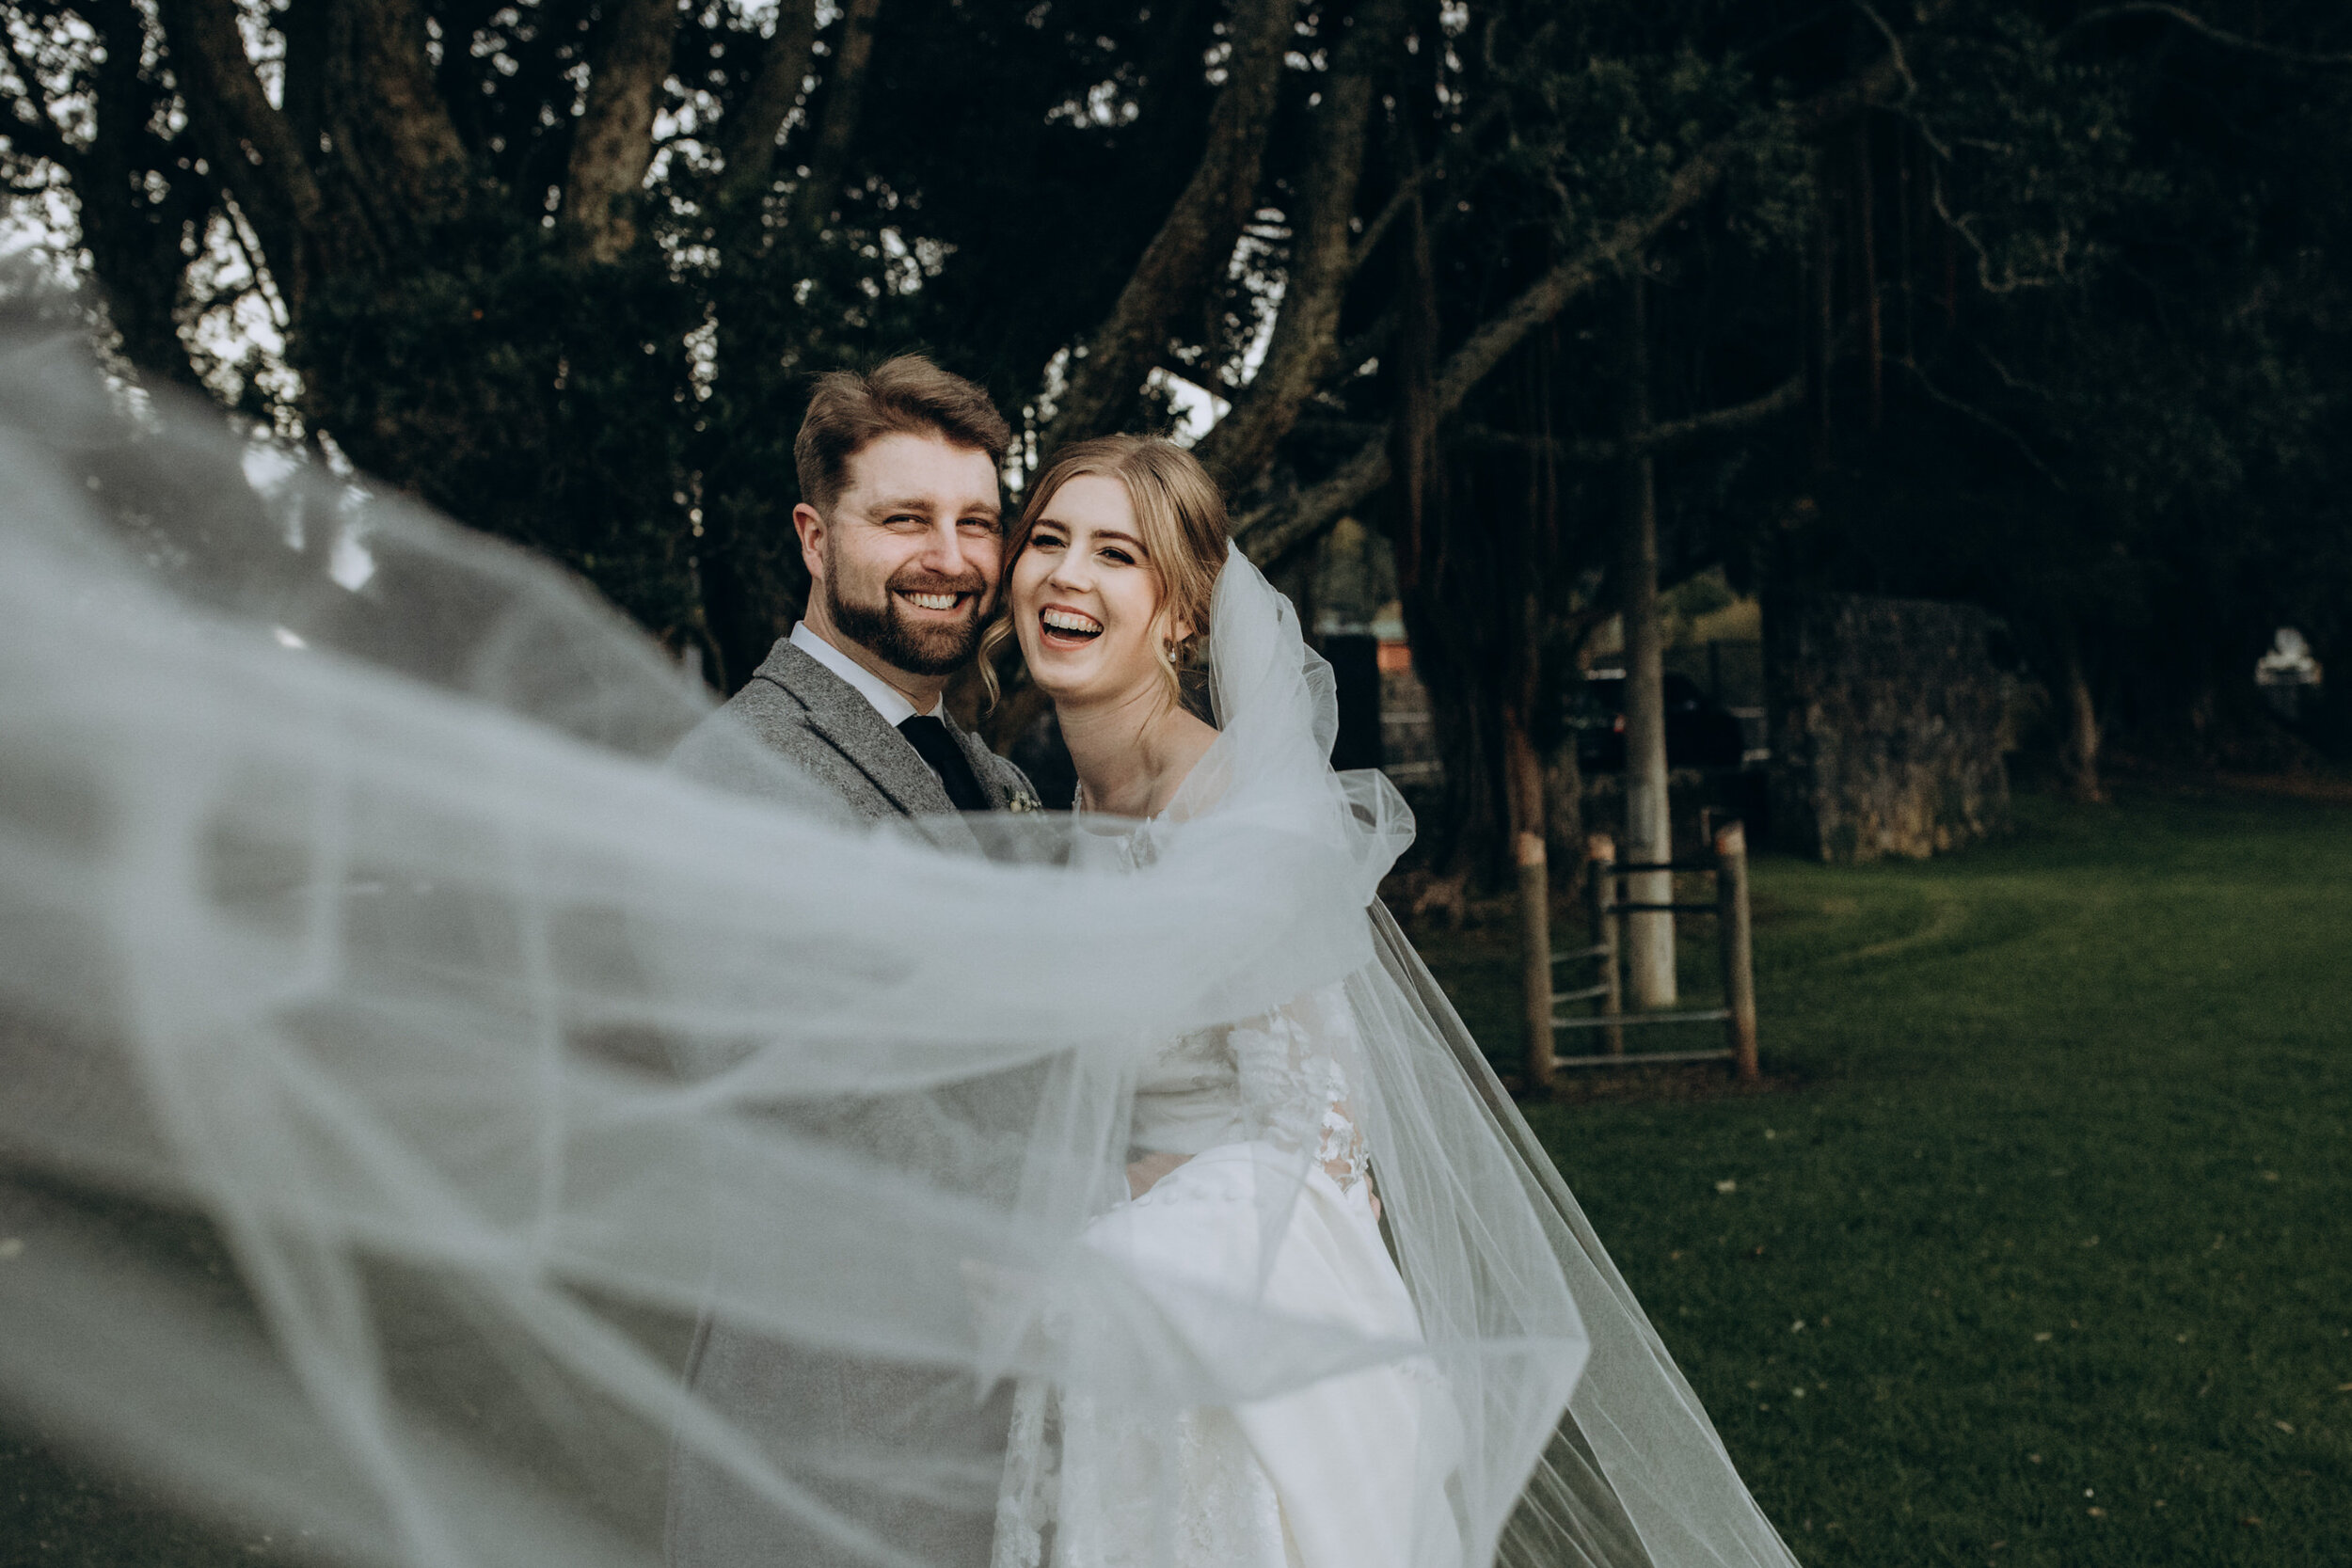 Candid wedding photos | Auckland Wedding | Wanting Huang Photography 